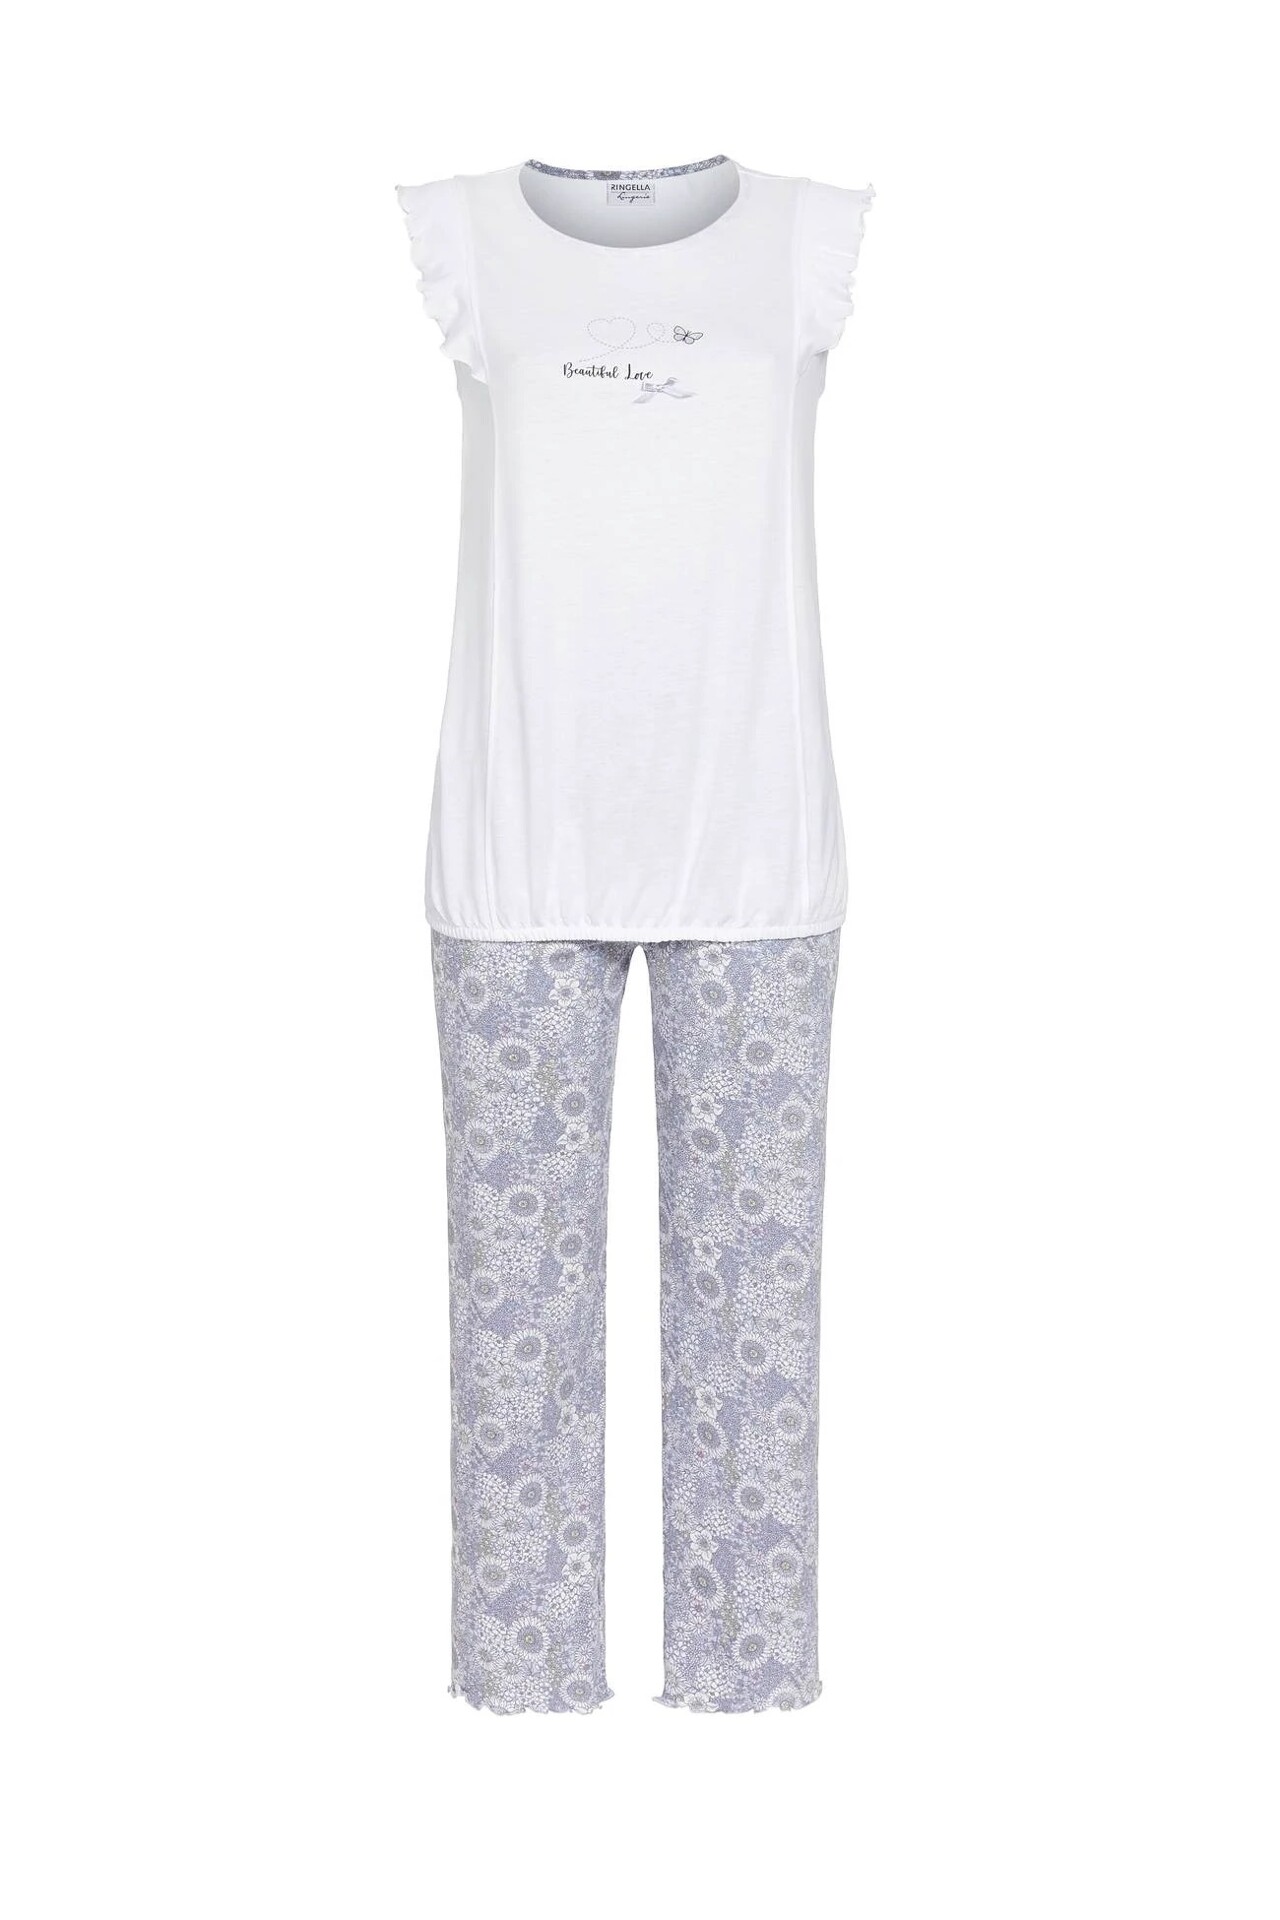 Pyžamo krátké RINGELLA (2261224-01), Velikost 46, Barva bílá